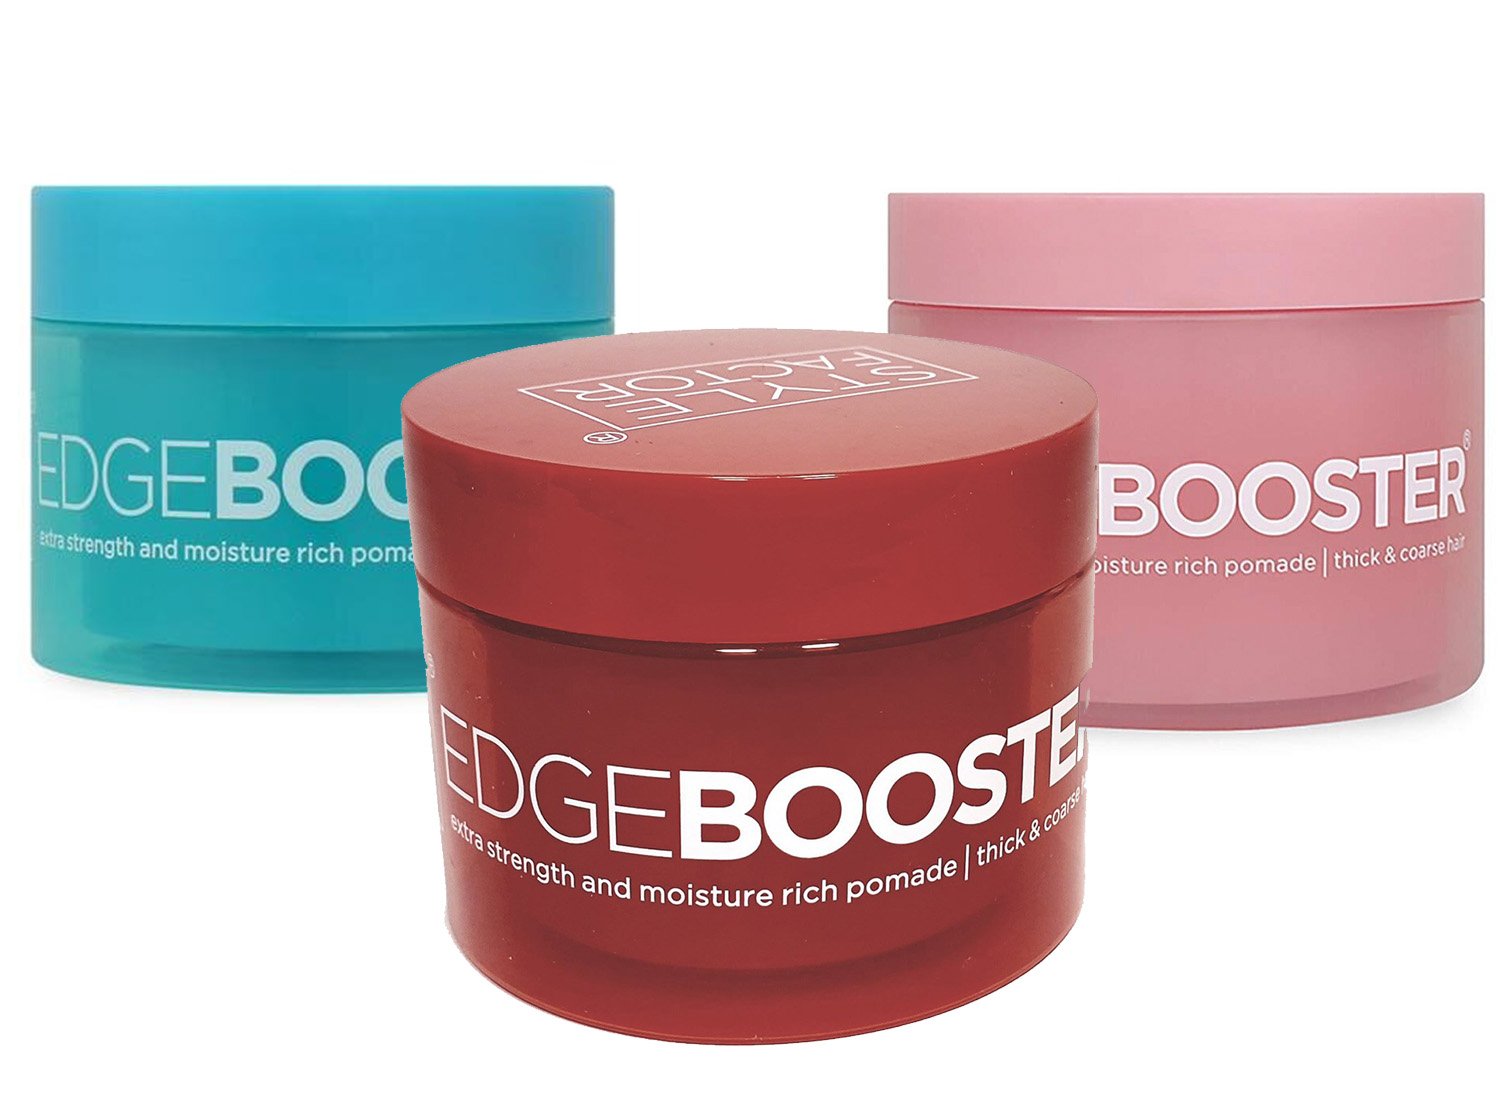 Edge Booster Lemon candy – NY Hair & Beauty Warehouse Inc.